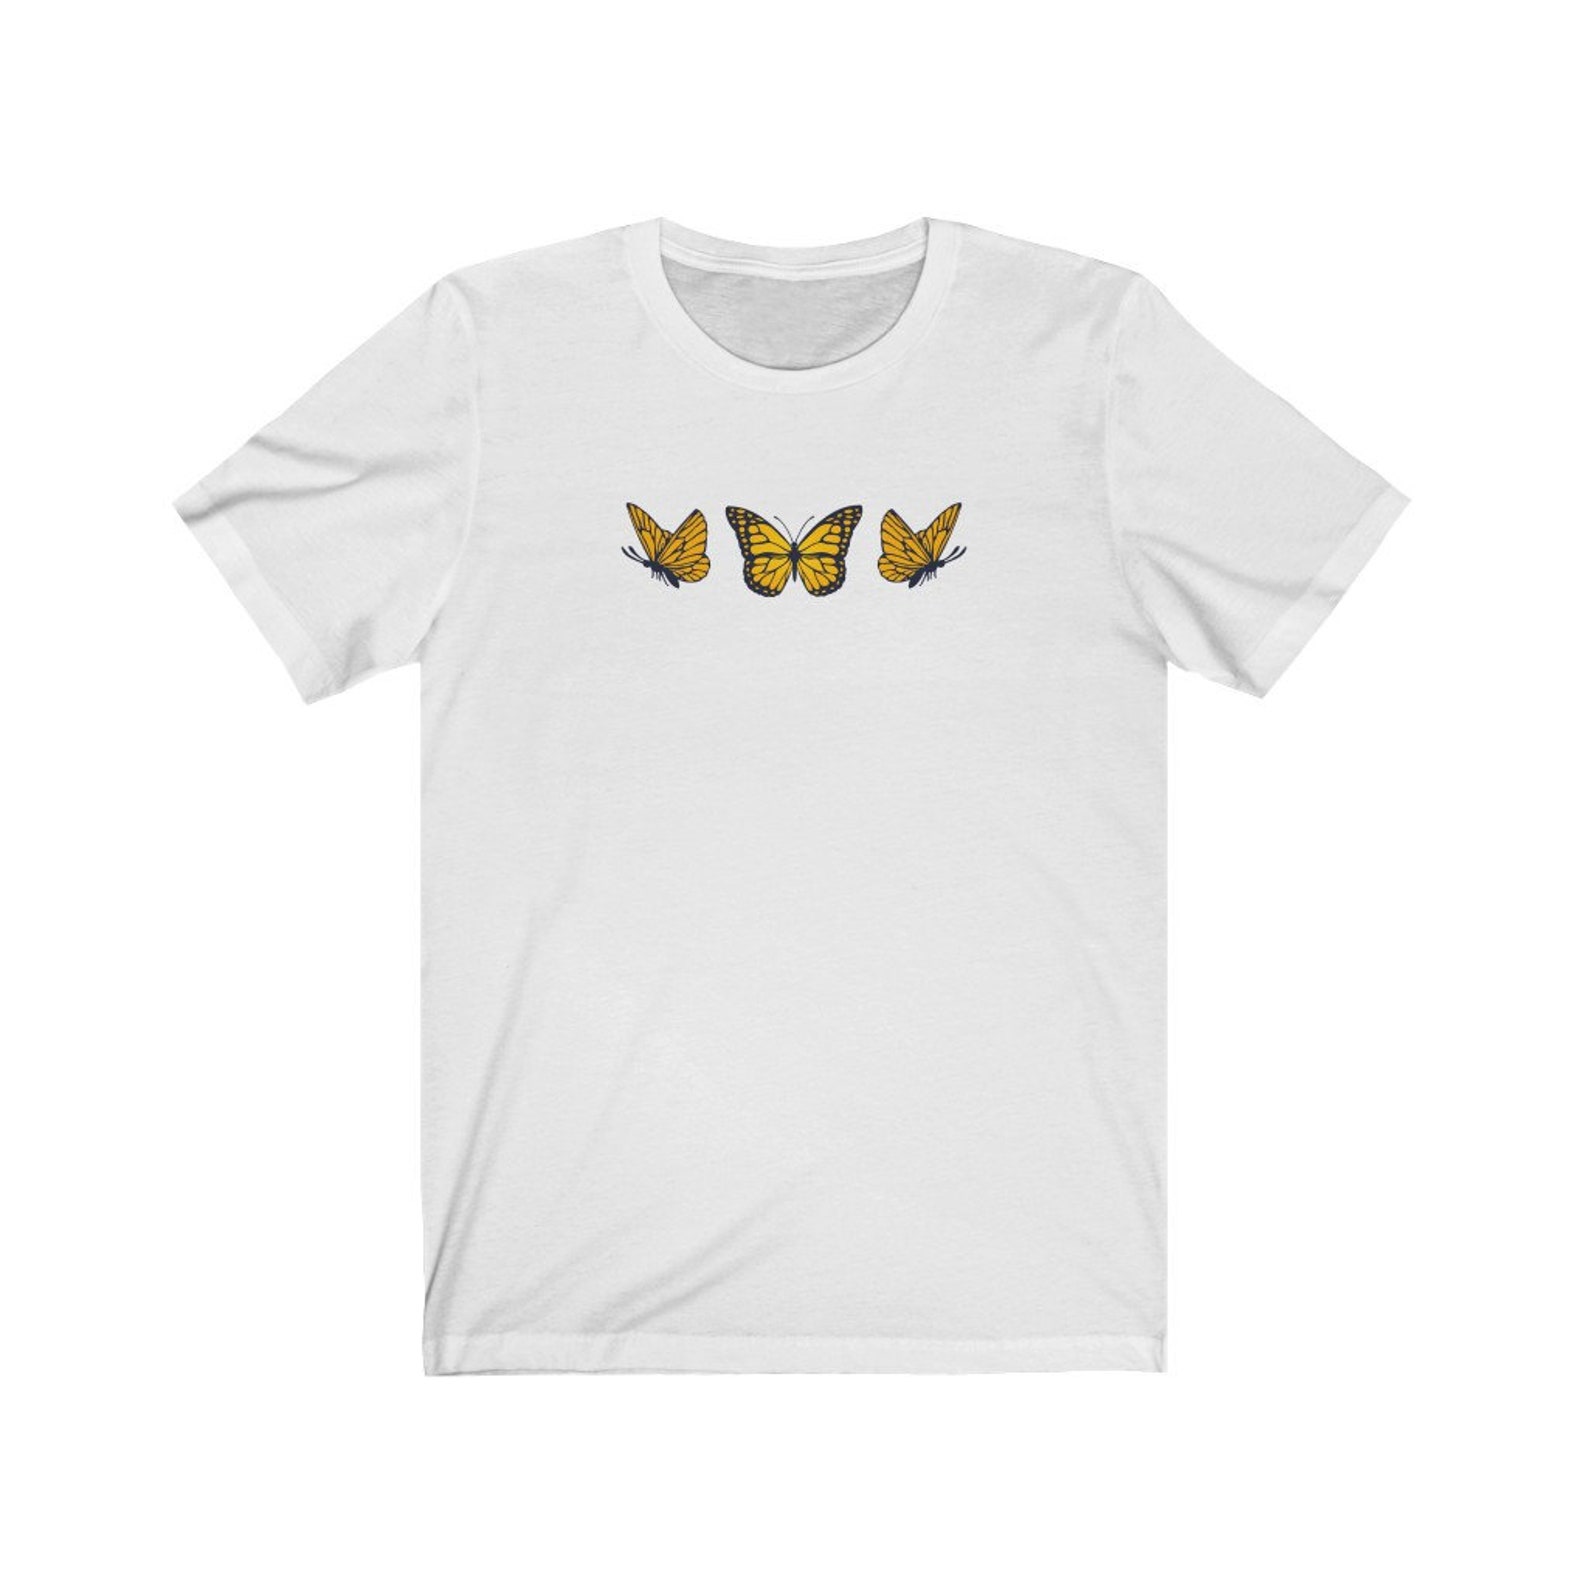 Butterfly t-shirt Butterfly shirt Butterfly tshirt Monarch | Etsy